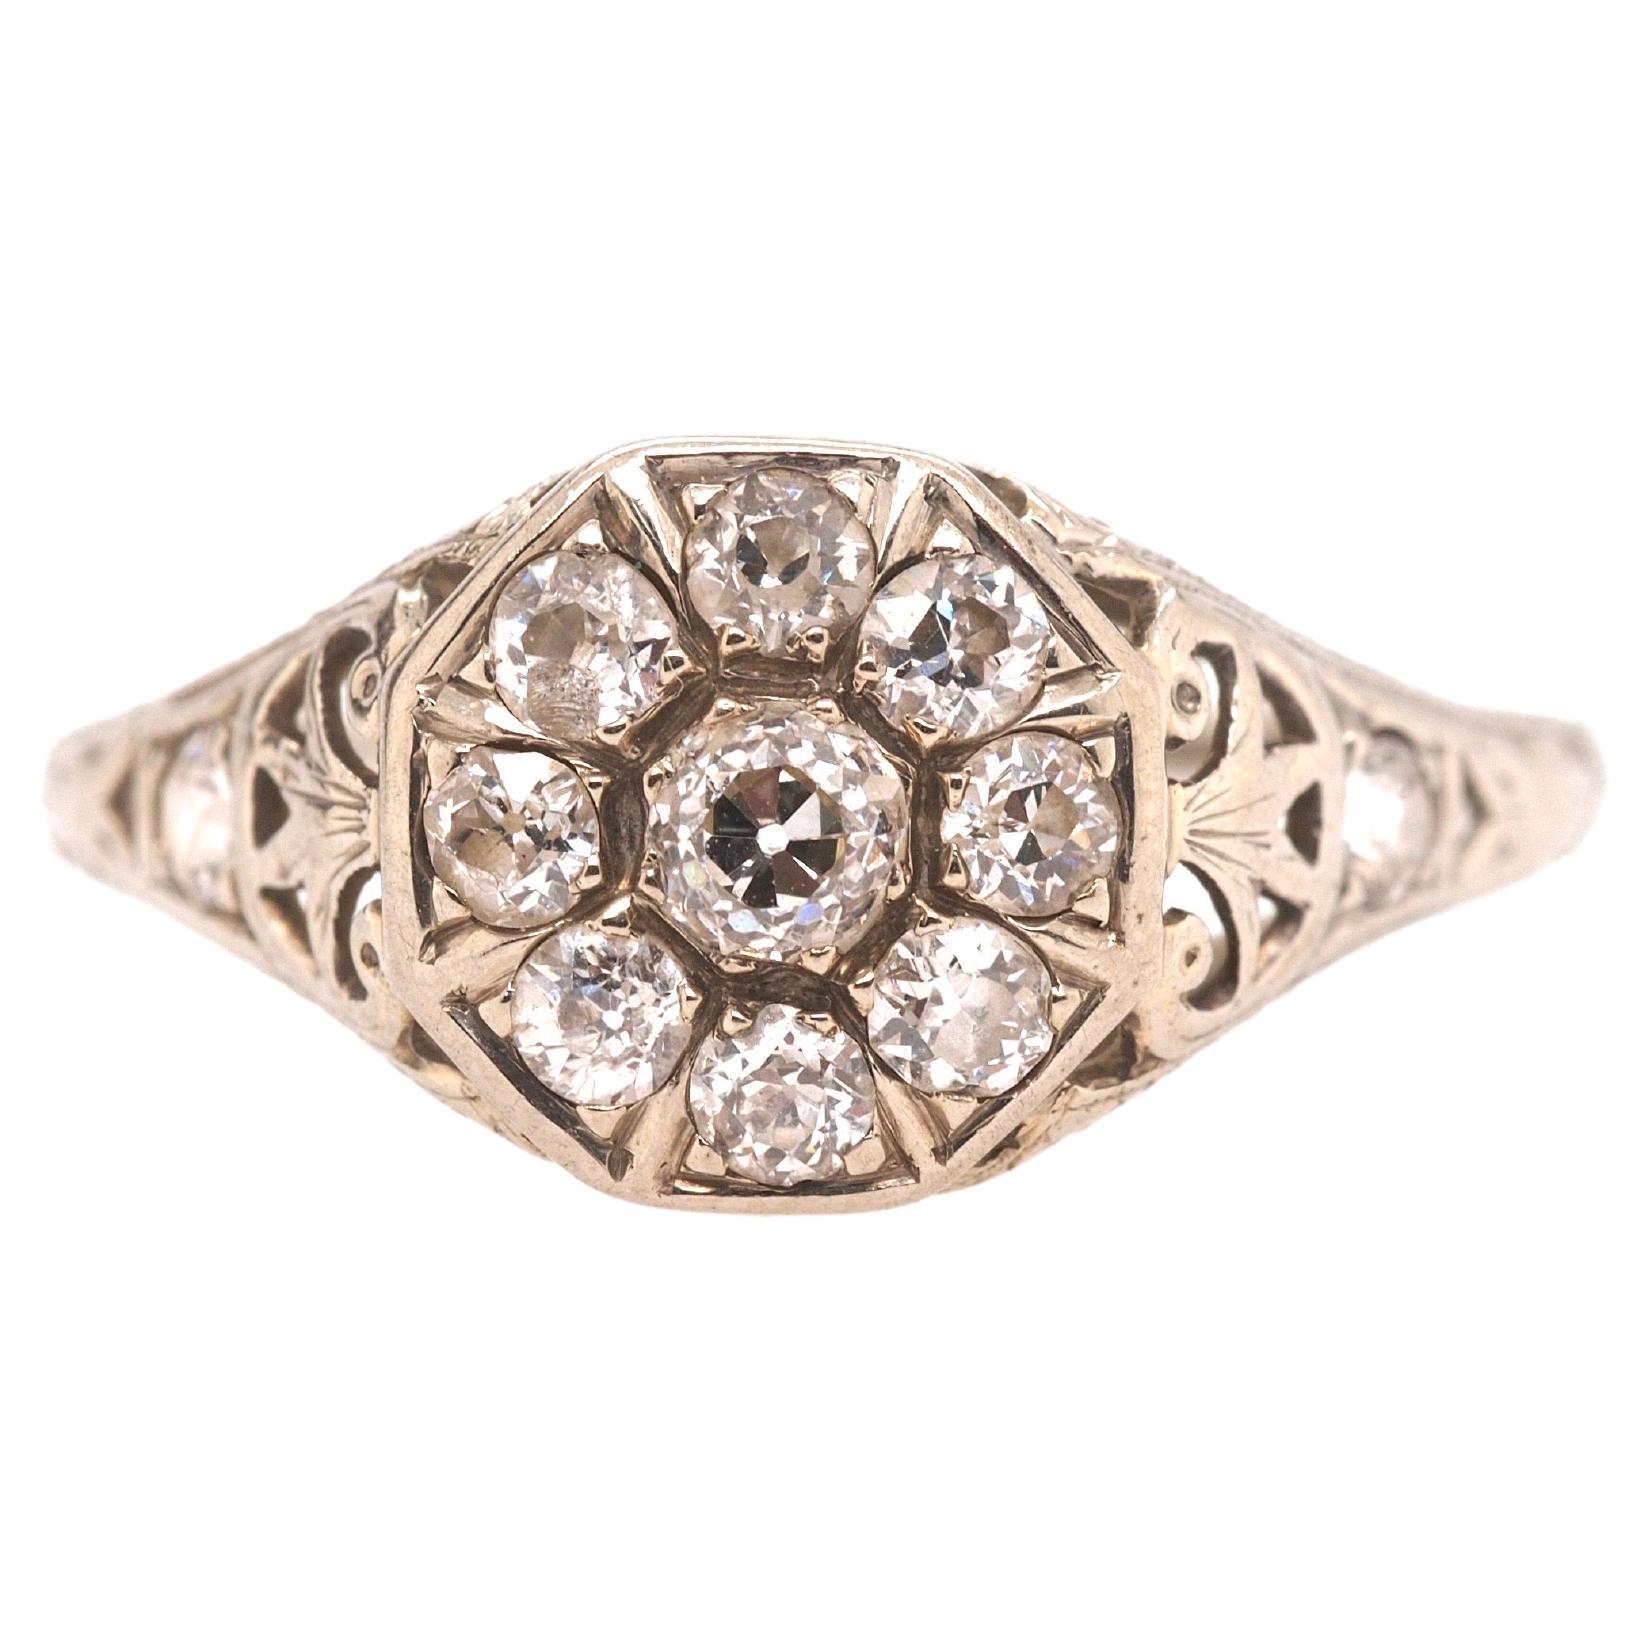 1910 Edwardian 18K White Gold/Platinum .75cttw Old Mine Diamond Engagement Ring